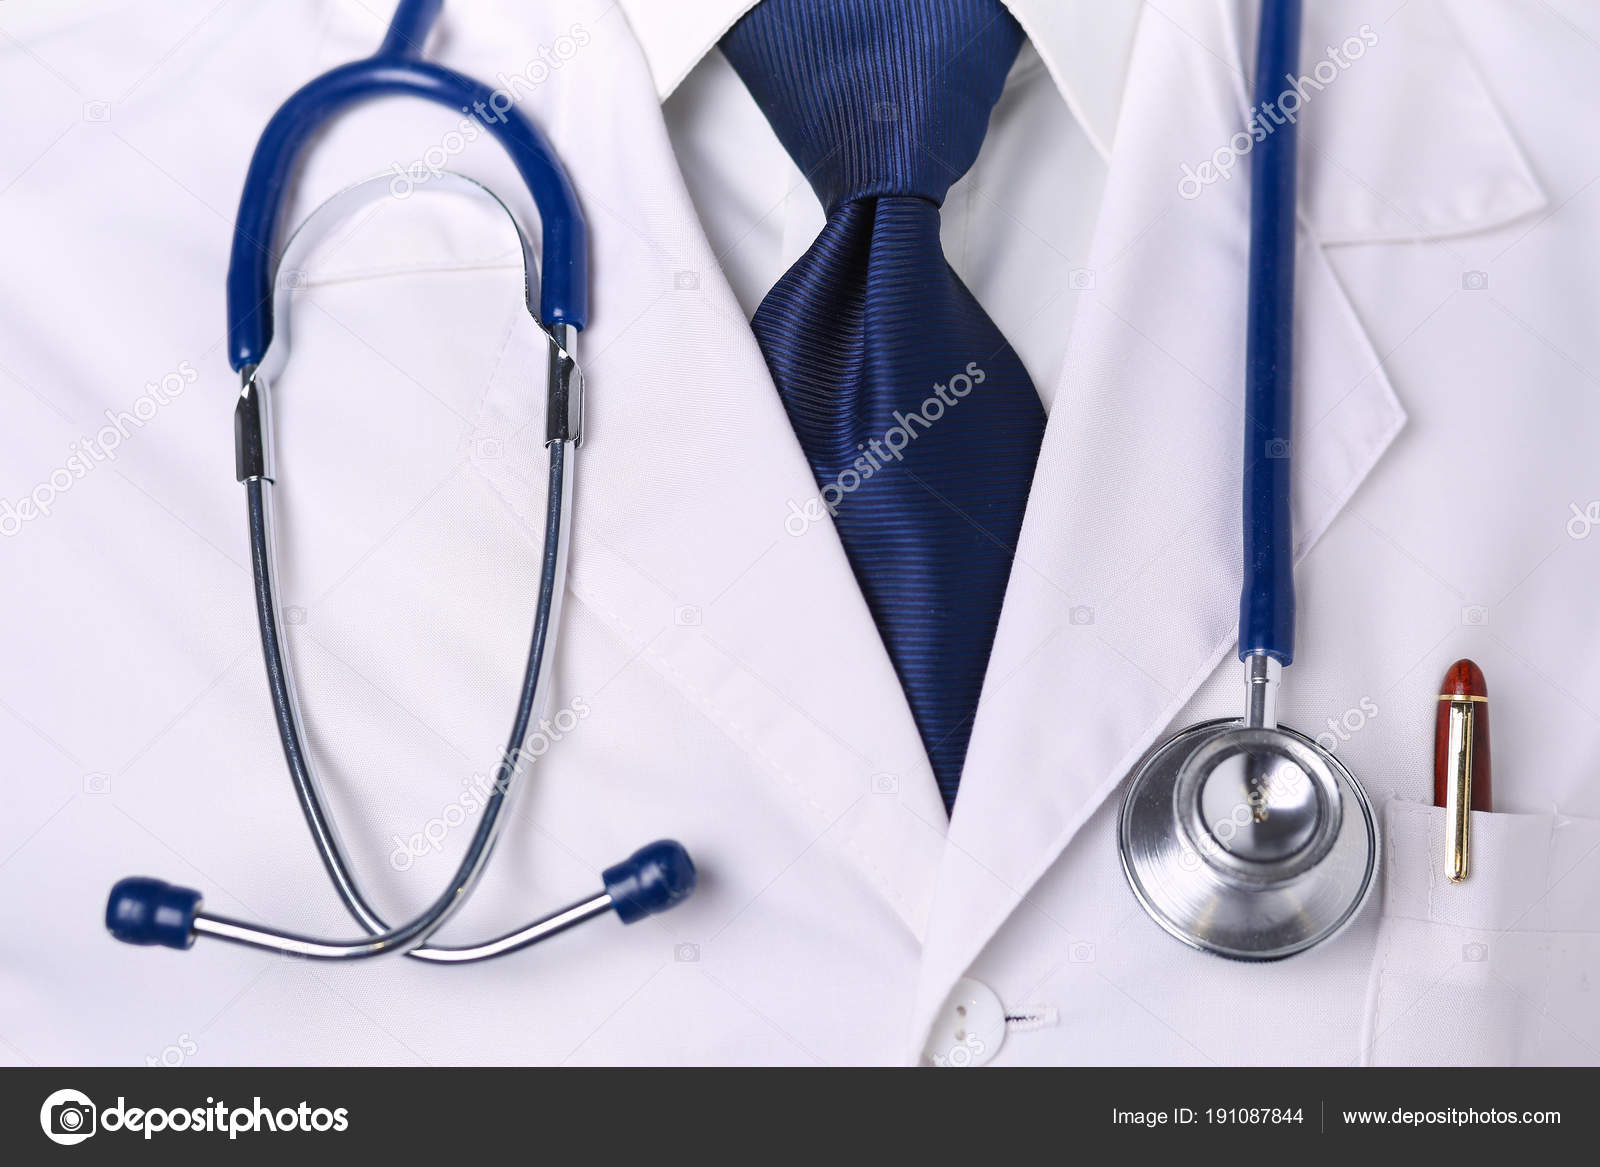 https://st3.depositphotos.com/3441621/19108/i/1600/depositphotos_191087844-stock-photo-medical-doctor-with-a-stethoscope.jpg